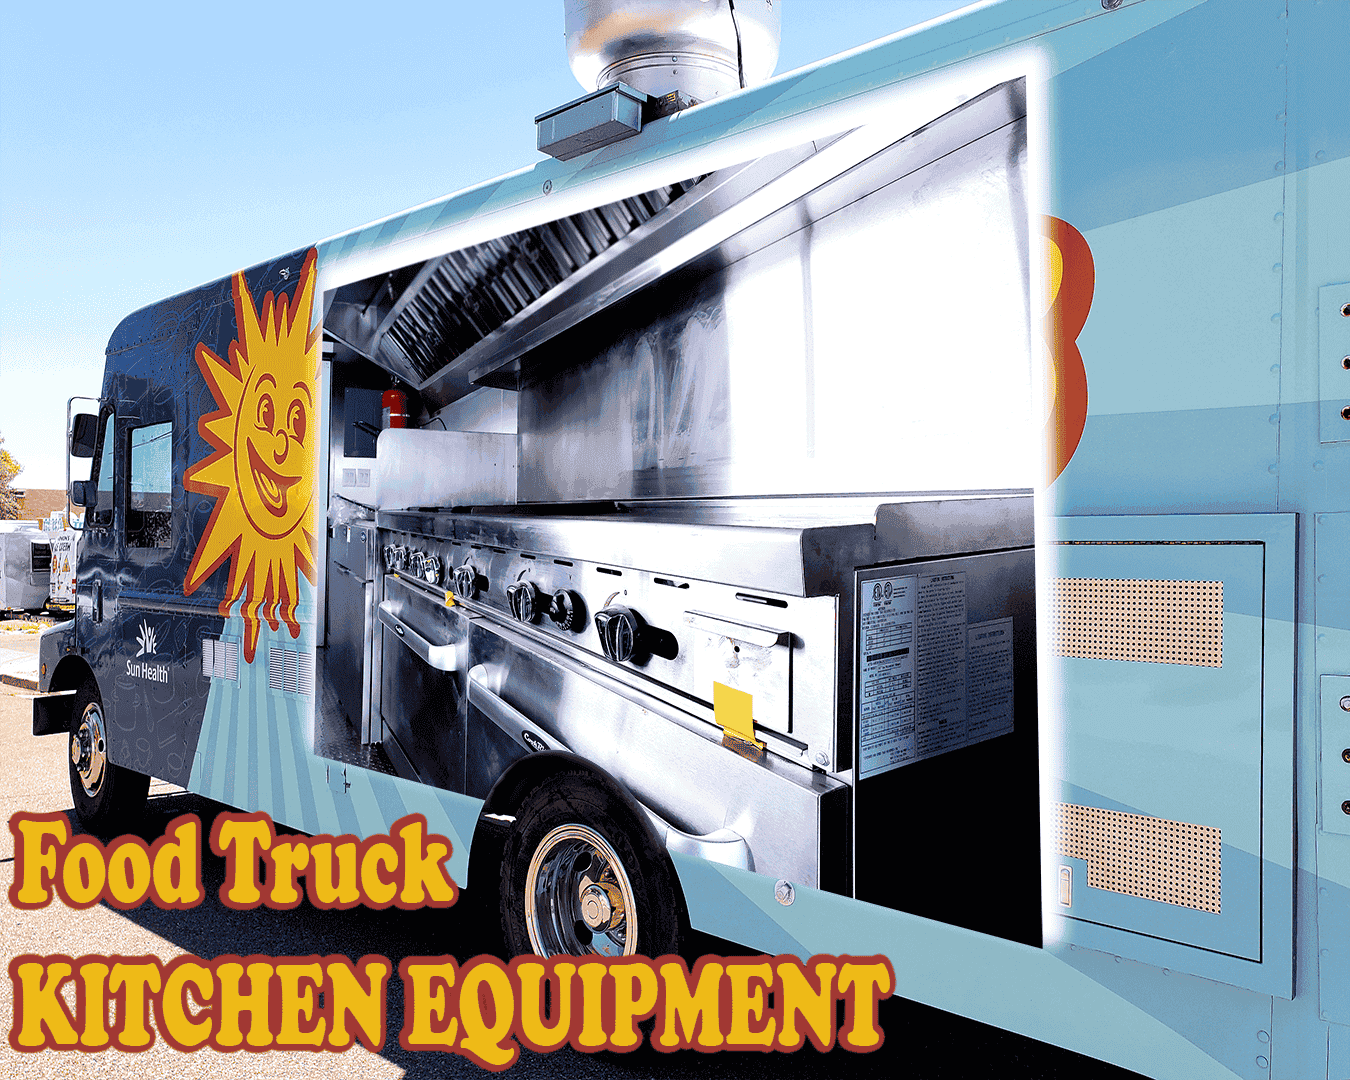 Food Truck Kitchen Equipment For Sale in Phoenix, AZ. Also called used restaurant equipment.